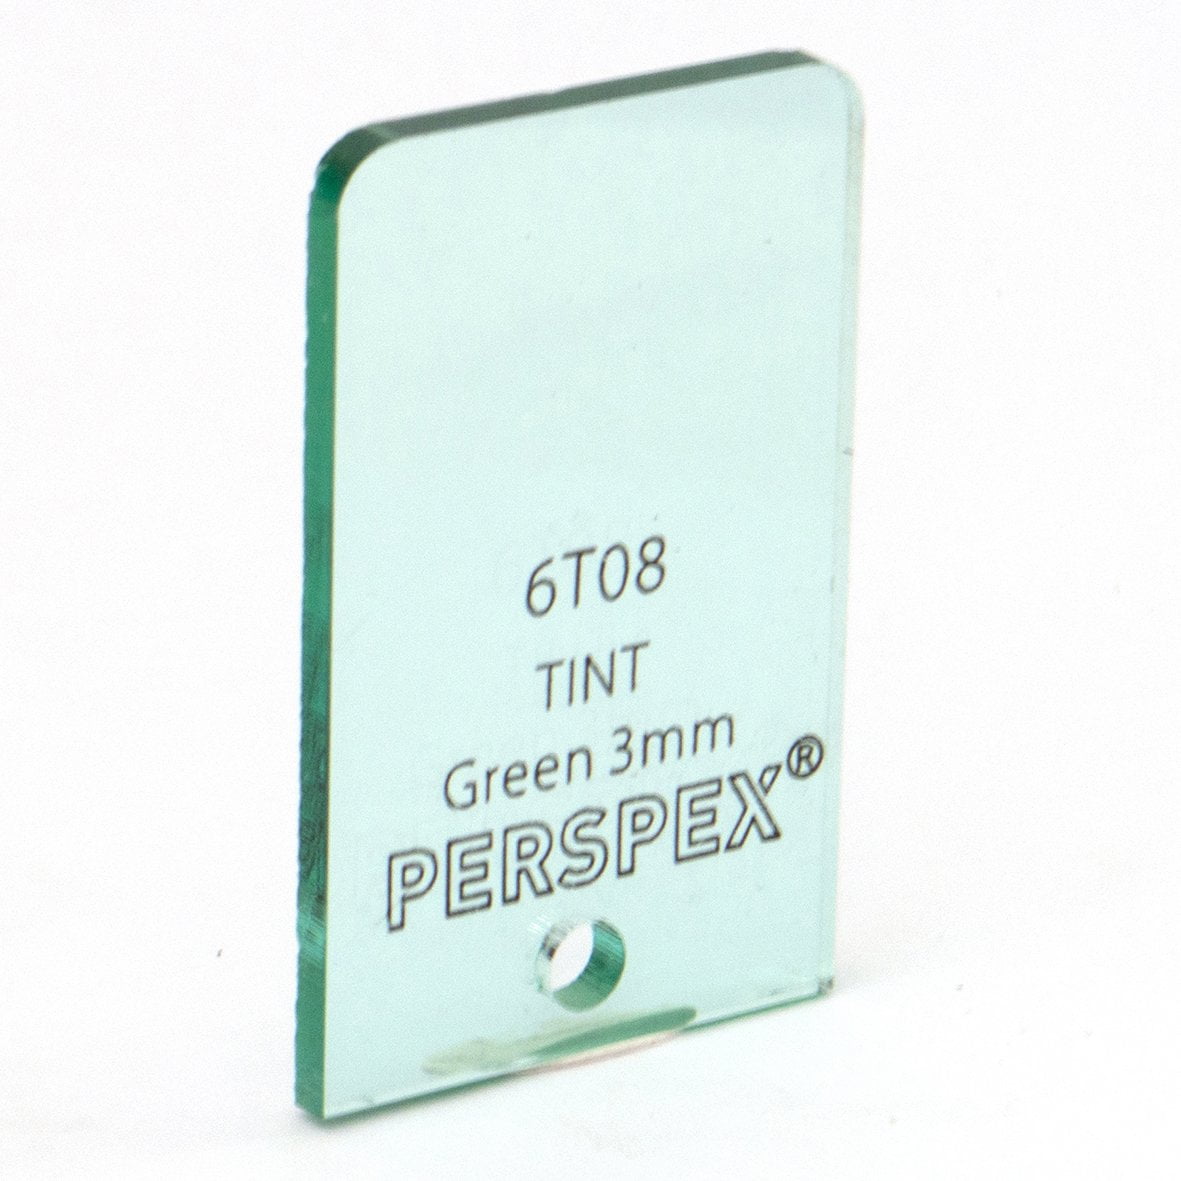 3mm Green Tint 6T08, 1000x600mm